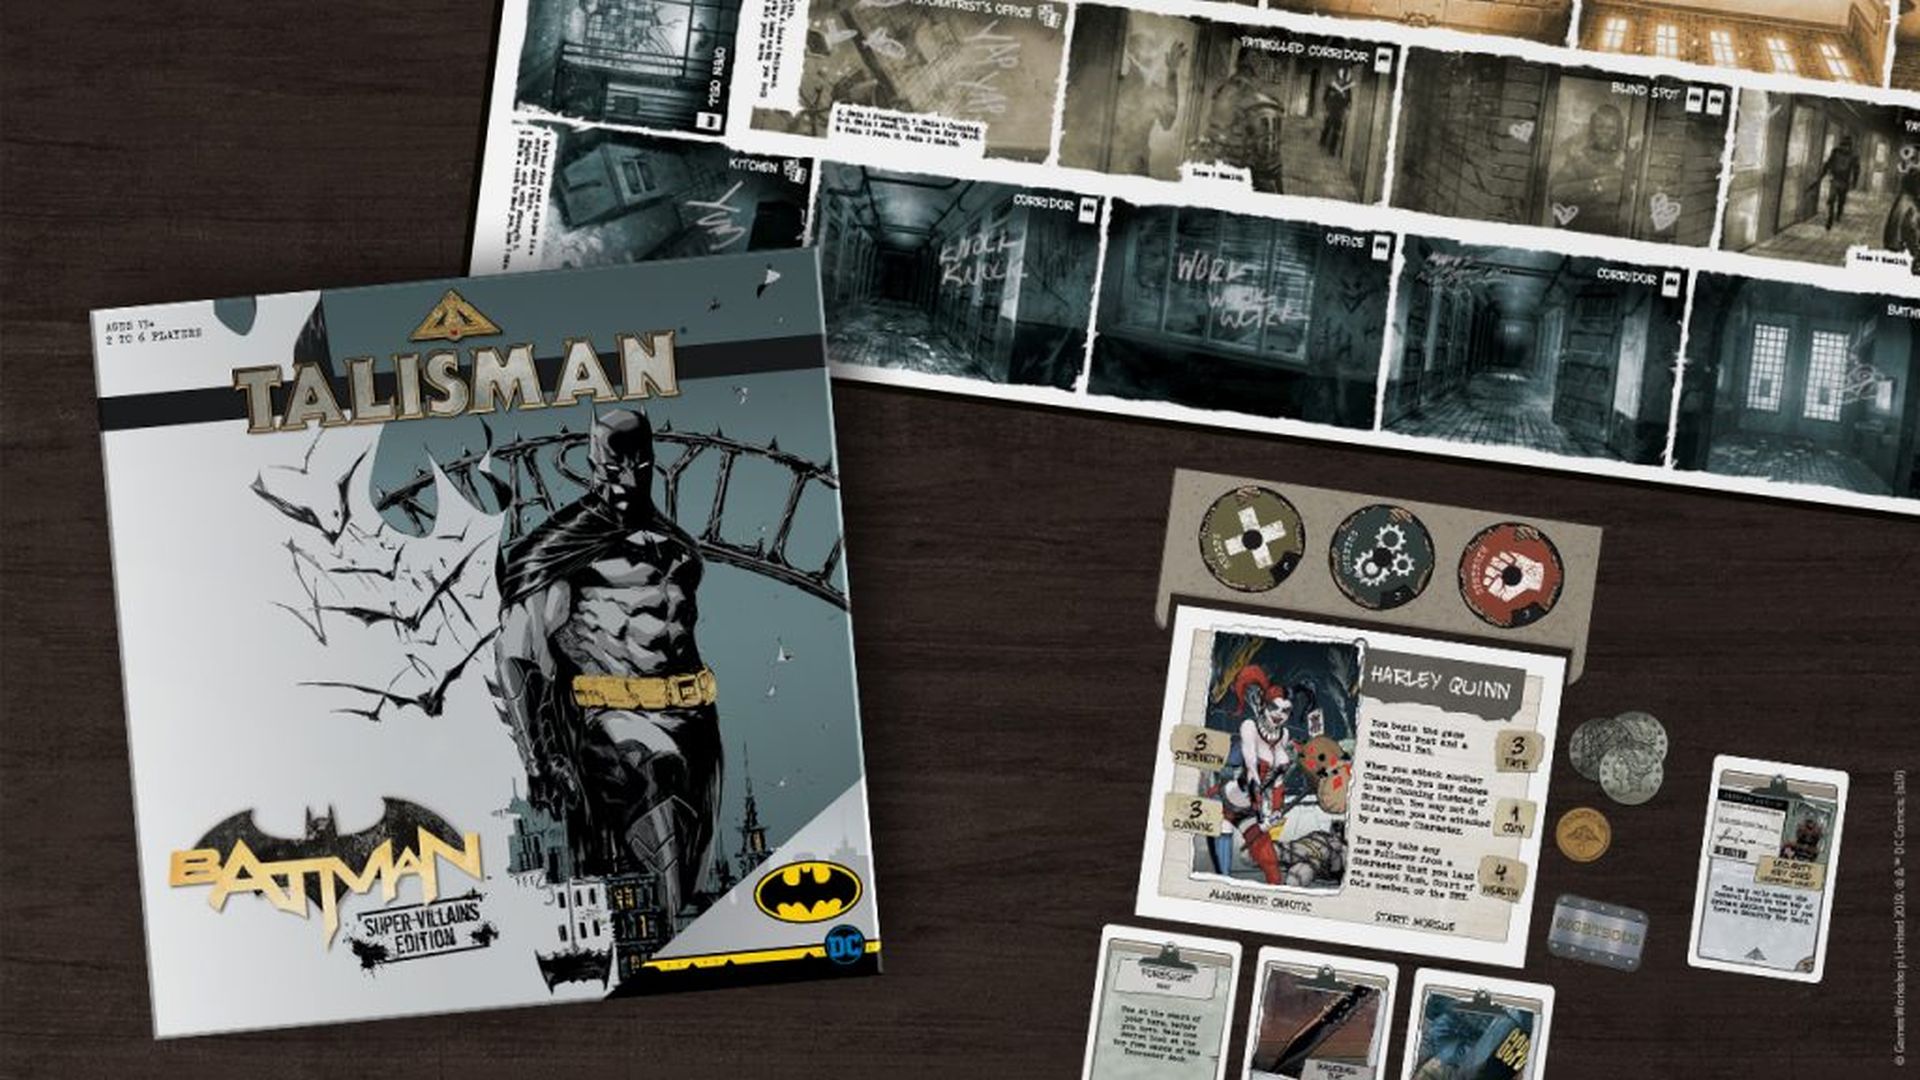 Batman is Also Getting a Version of TALISMAN — GeekTyrant